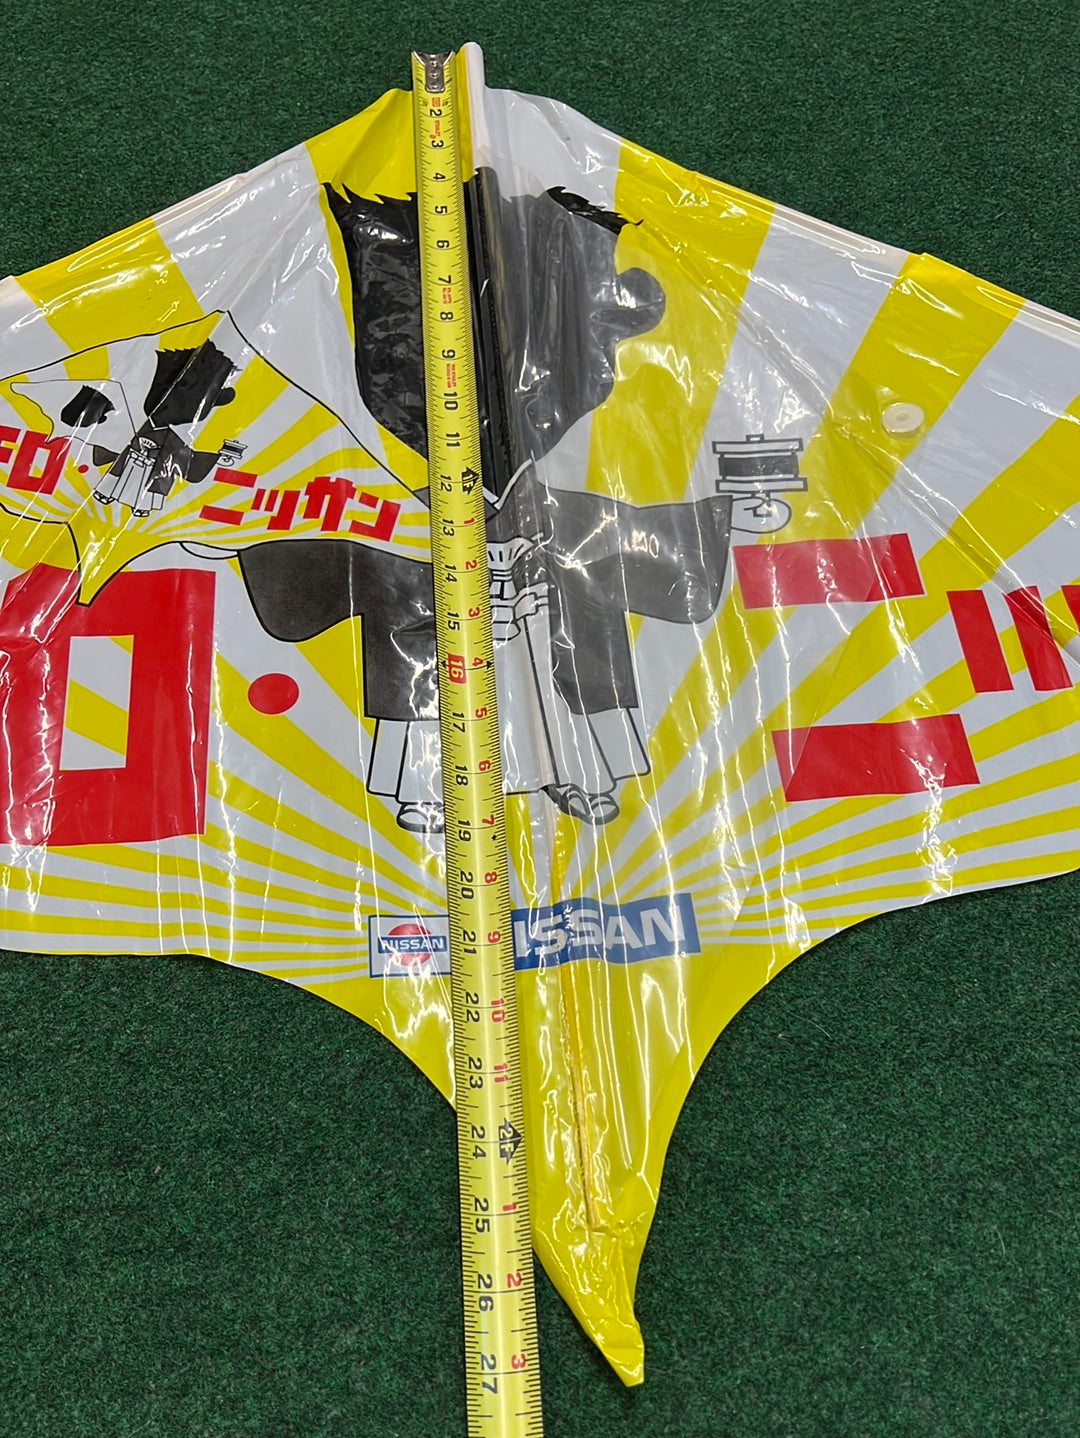 Ichiro -  Nissan Japanese Promotional Advertising Kite (2)